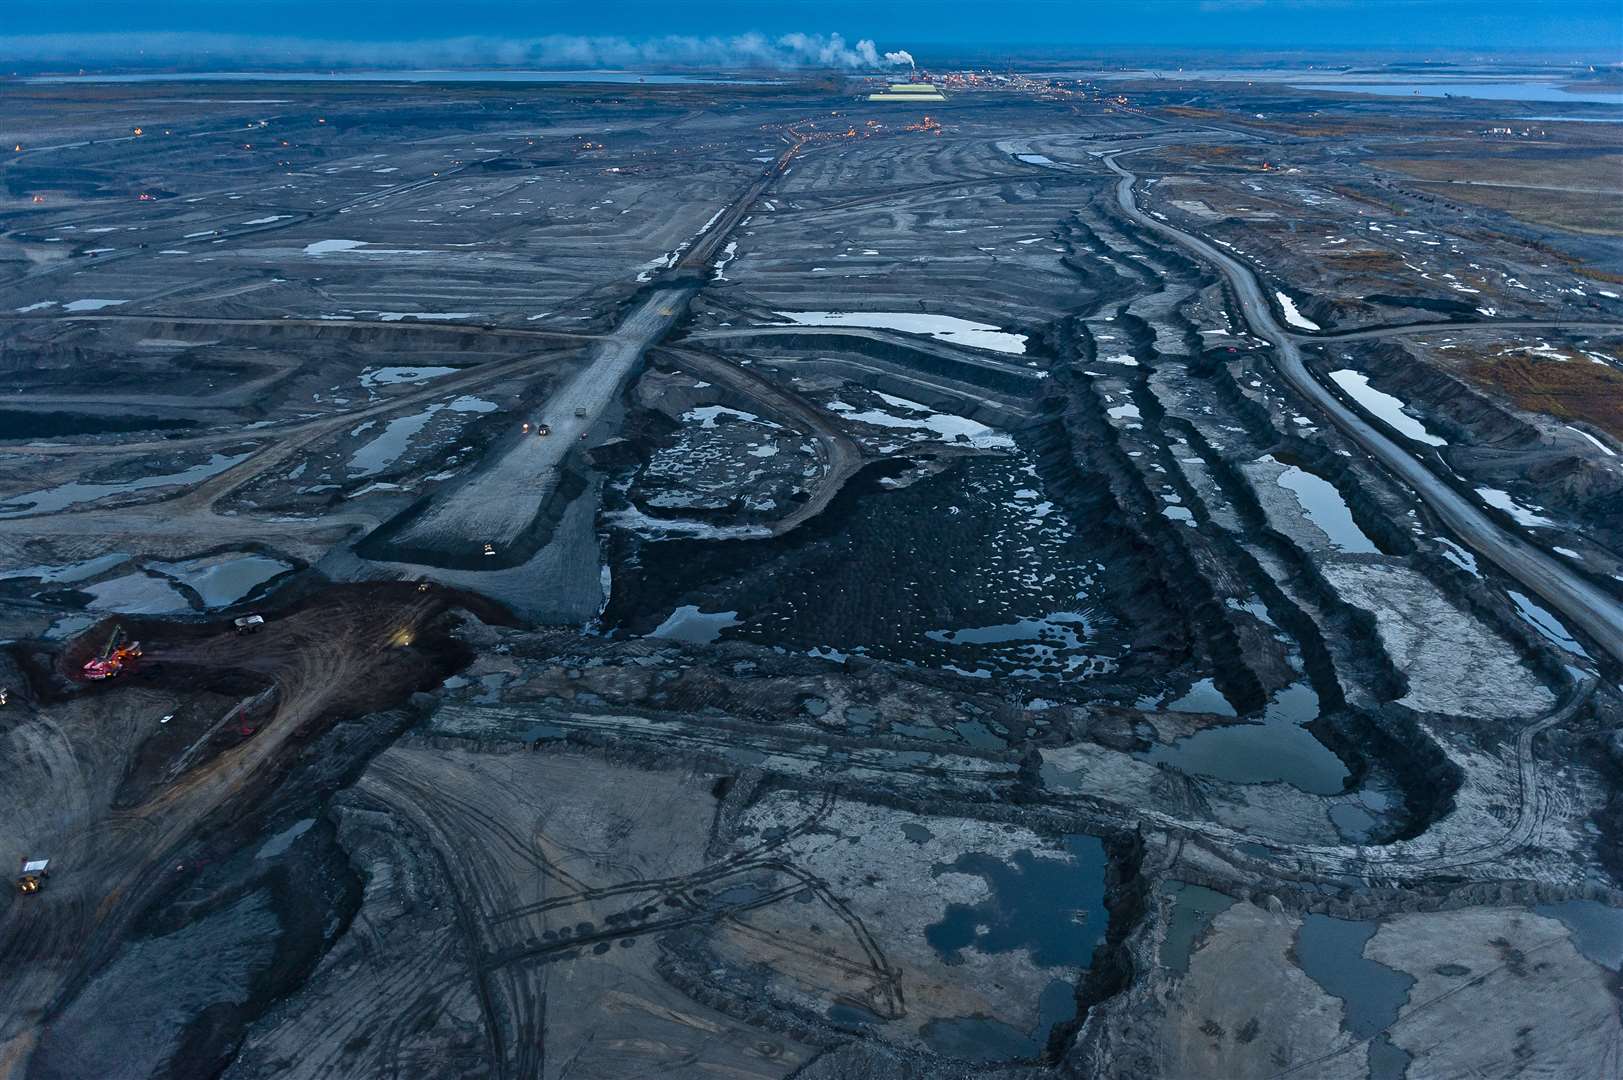 World of tar by Garth Lenz (Garth Lenz/Wildlife Photographer of the Year)